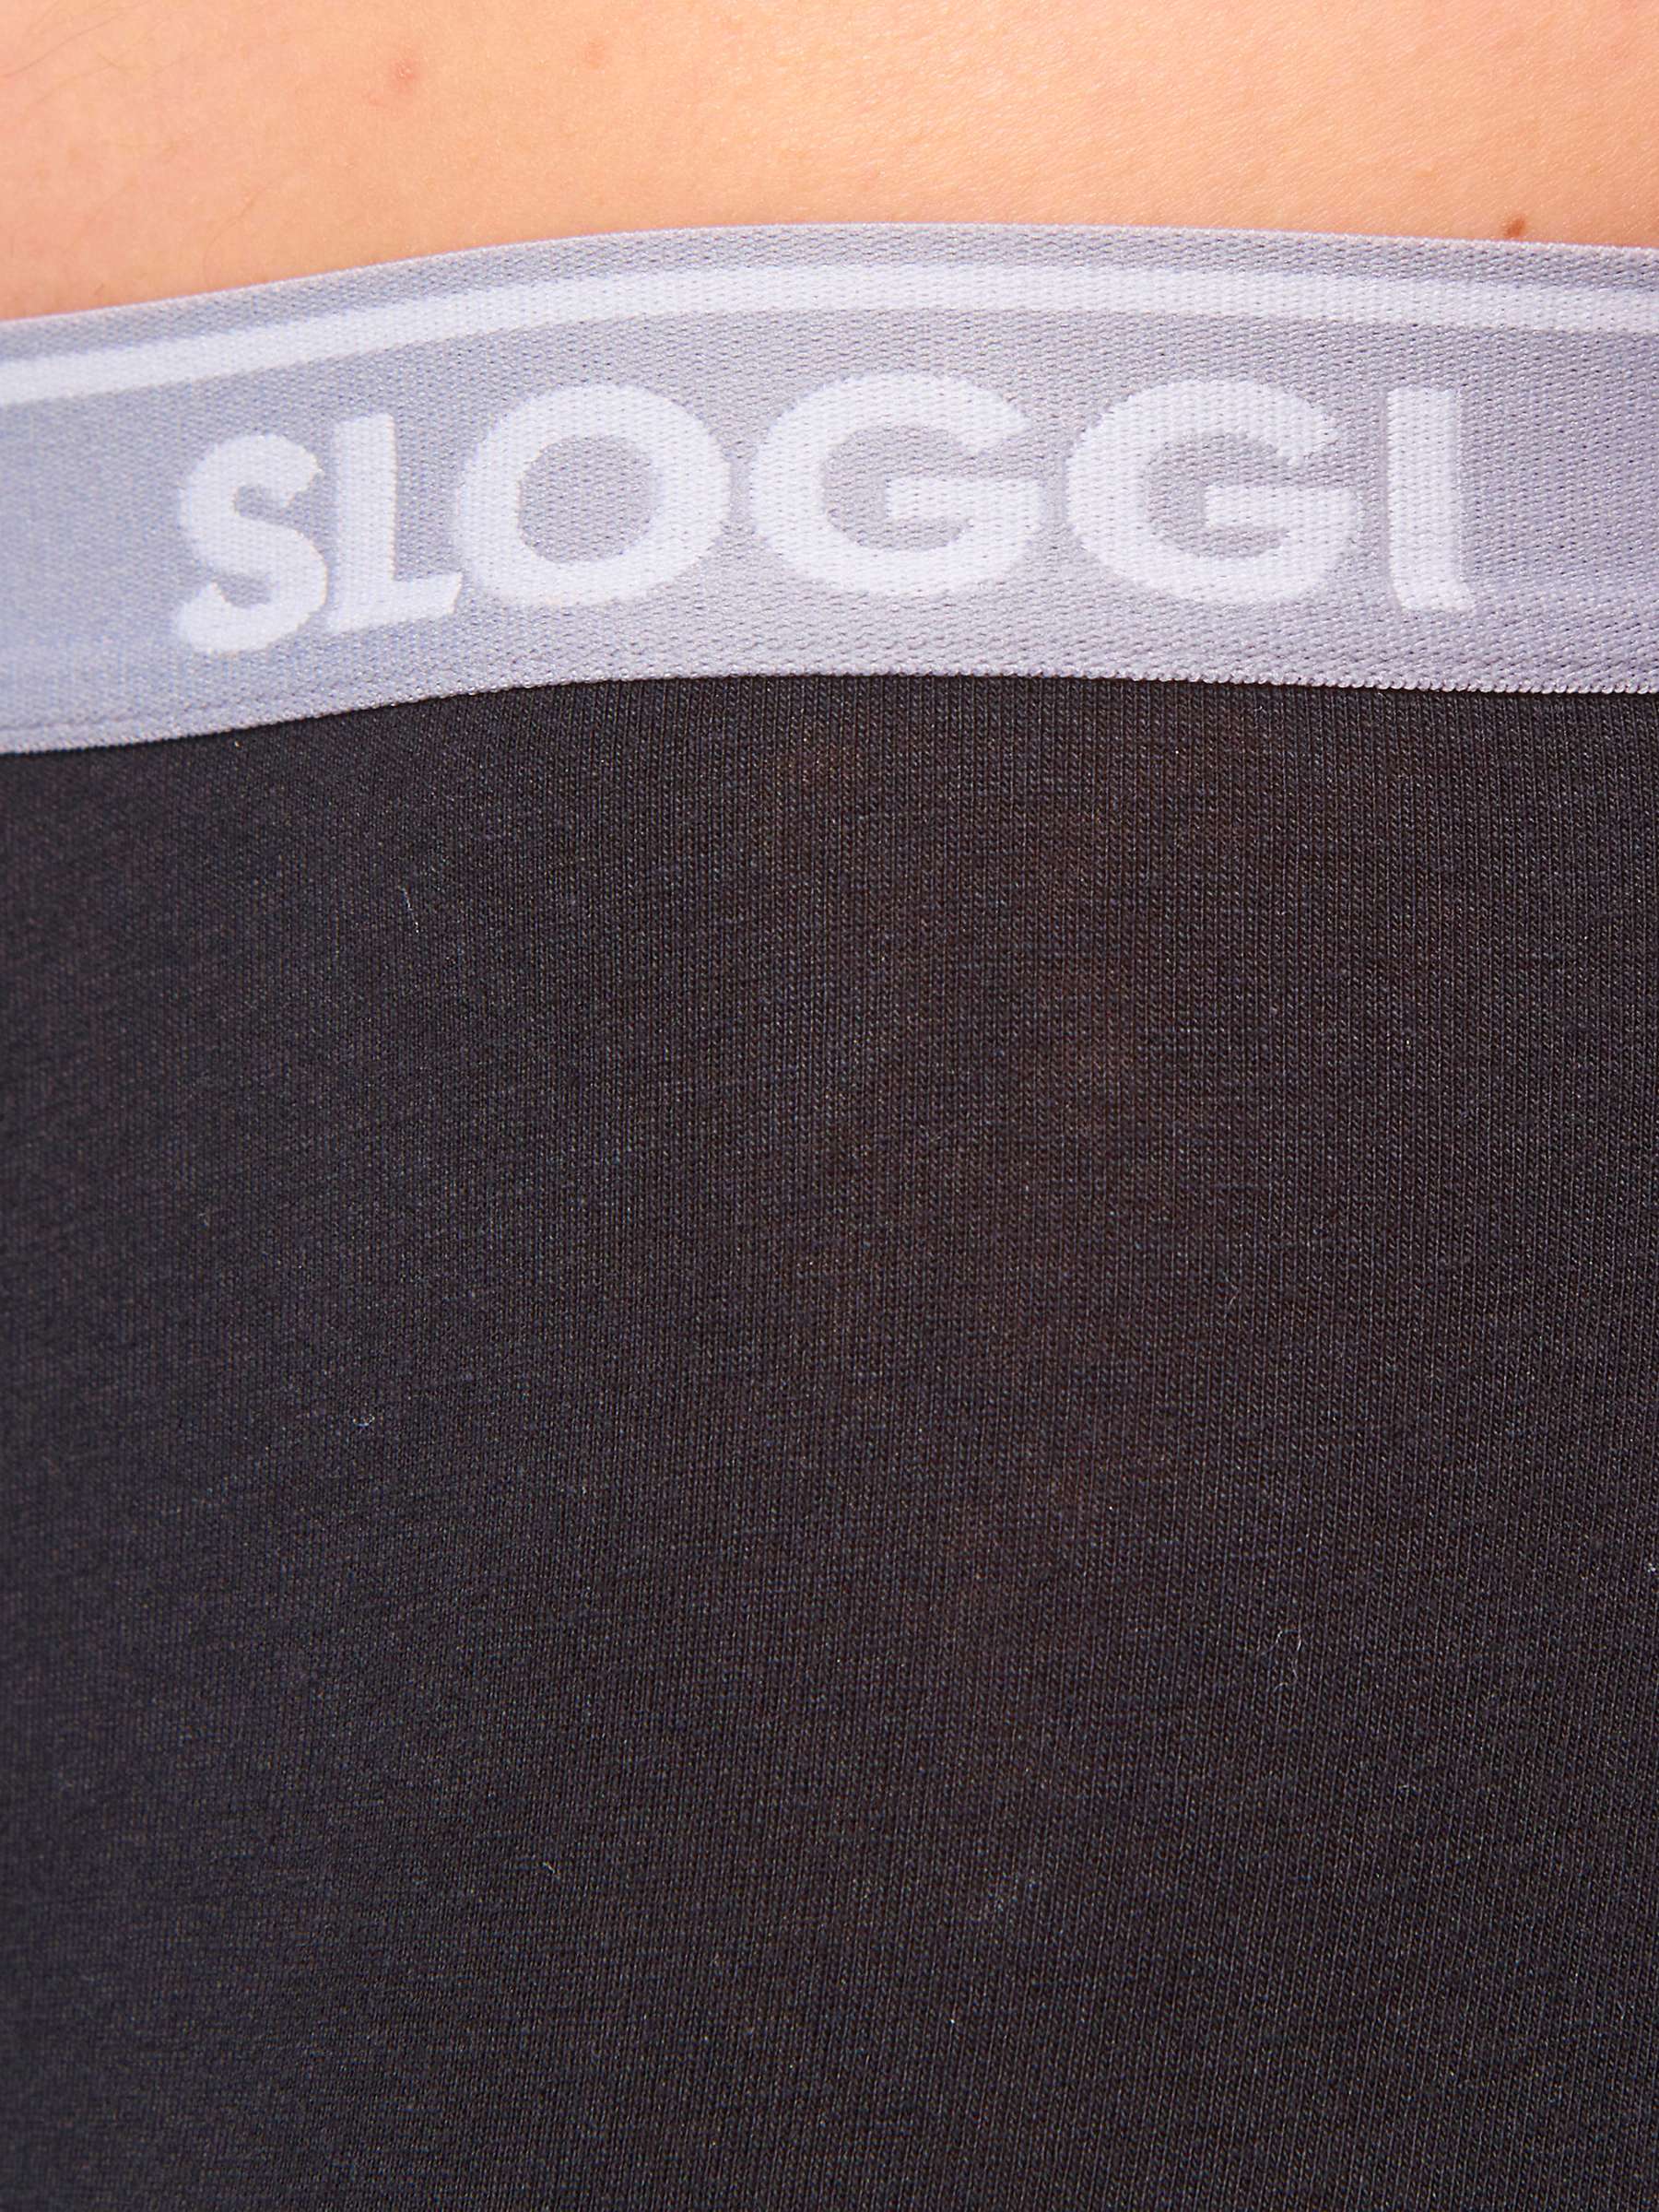 Buy sloggi Classic Short Briefs, Pack of 2, Black Online at johnlewis.com